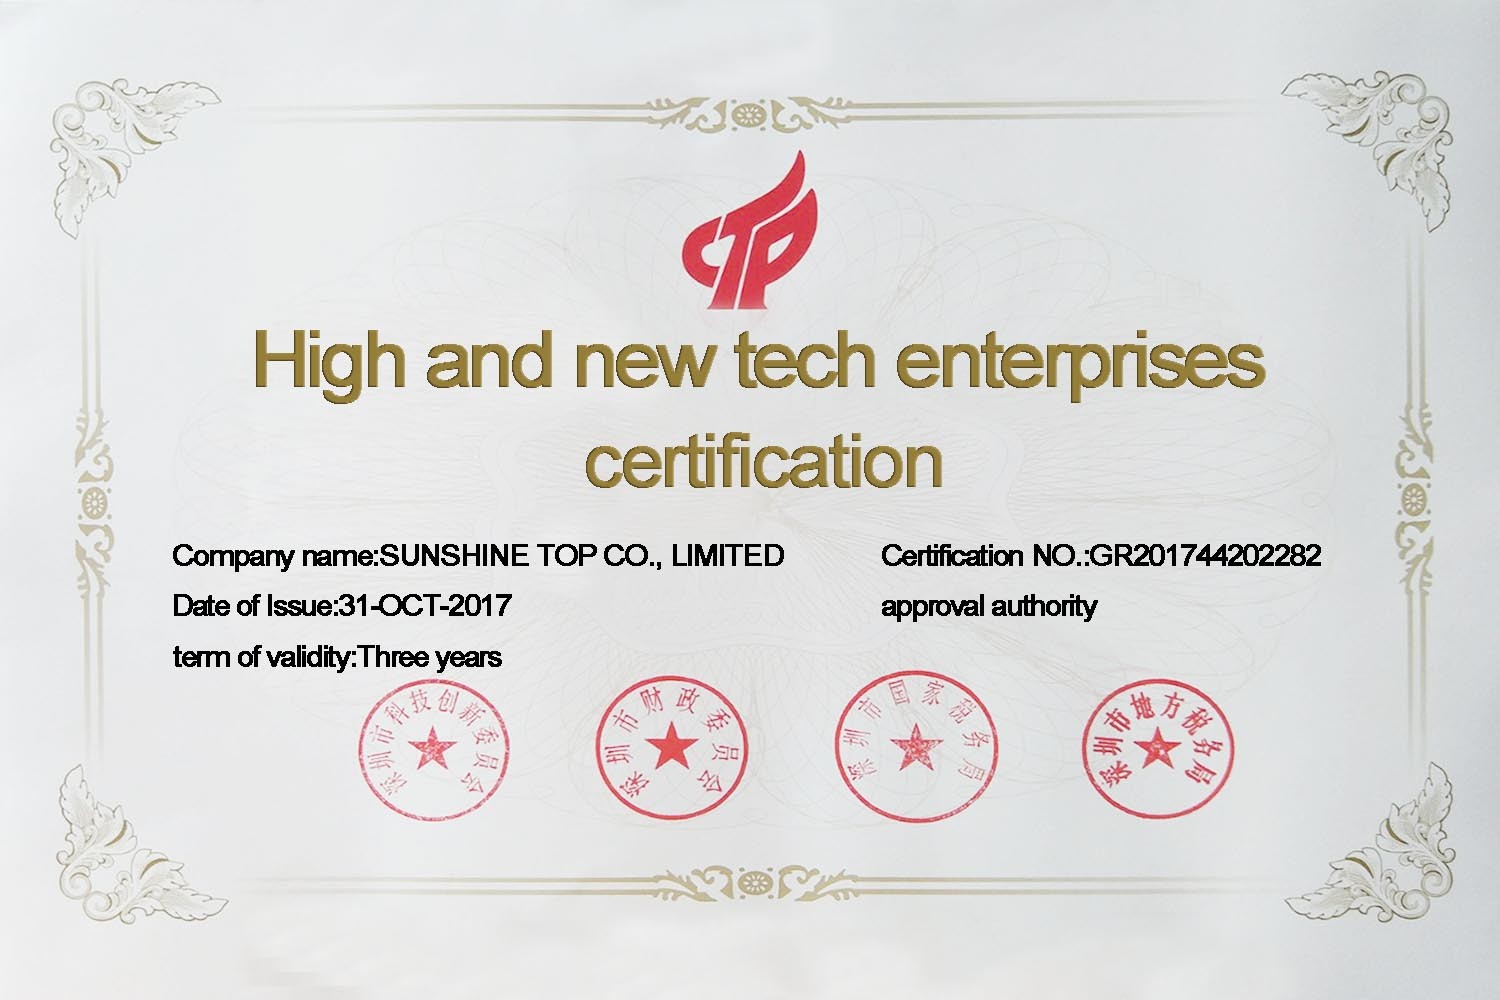 Certification National Hi-Tech Enterprises